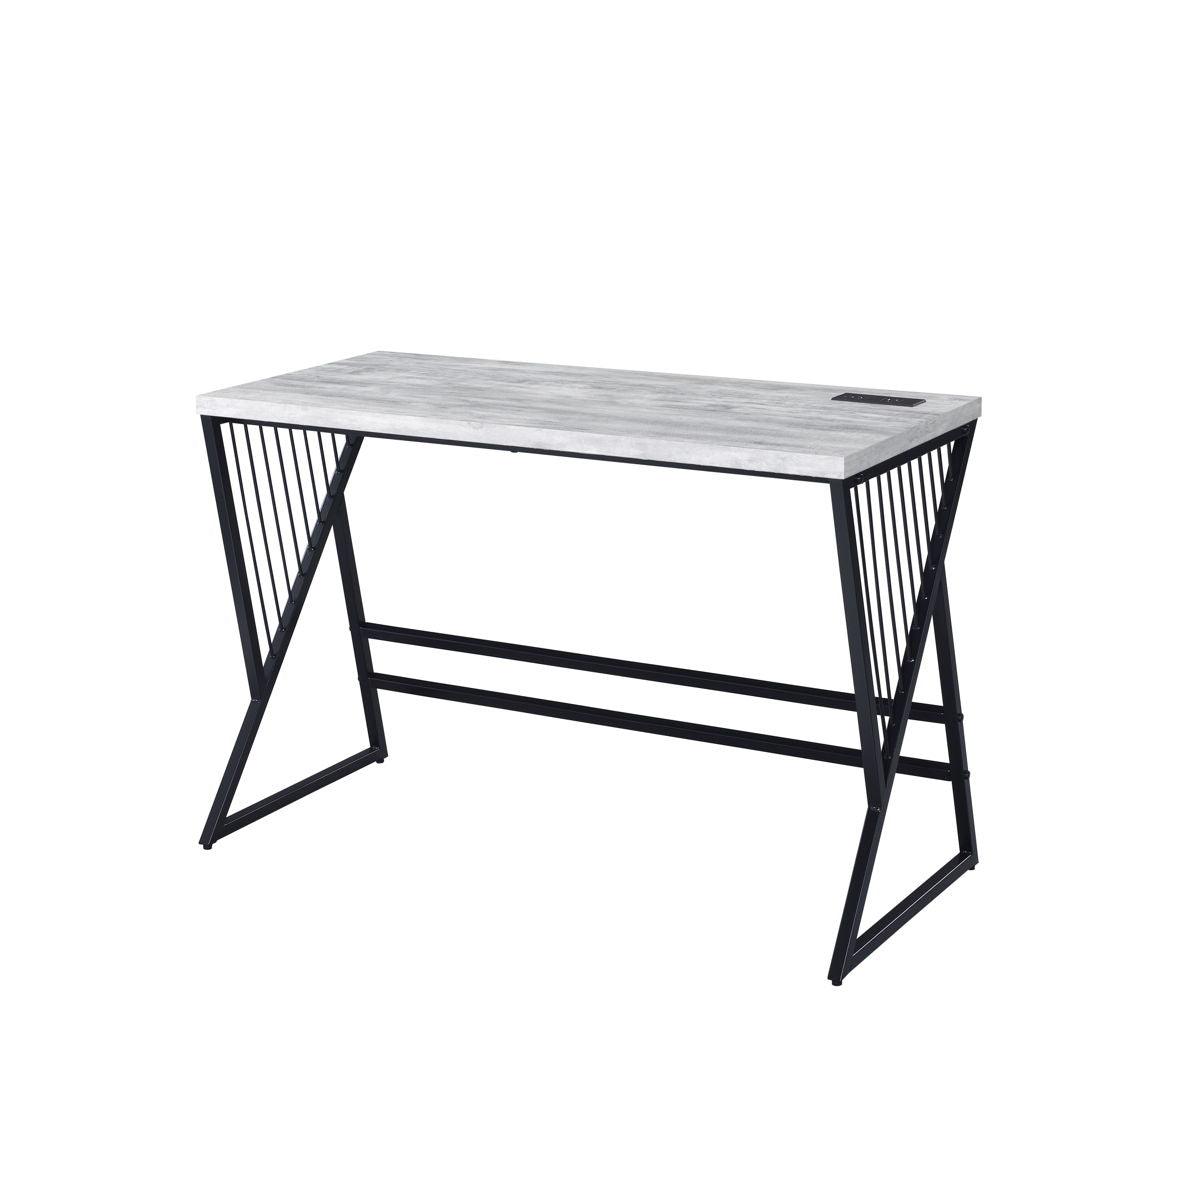 ACME - Collick - Writing Desk - Weathered Gray & Black Finish - 5th Avenue Furniture